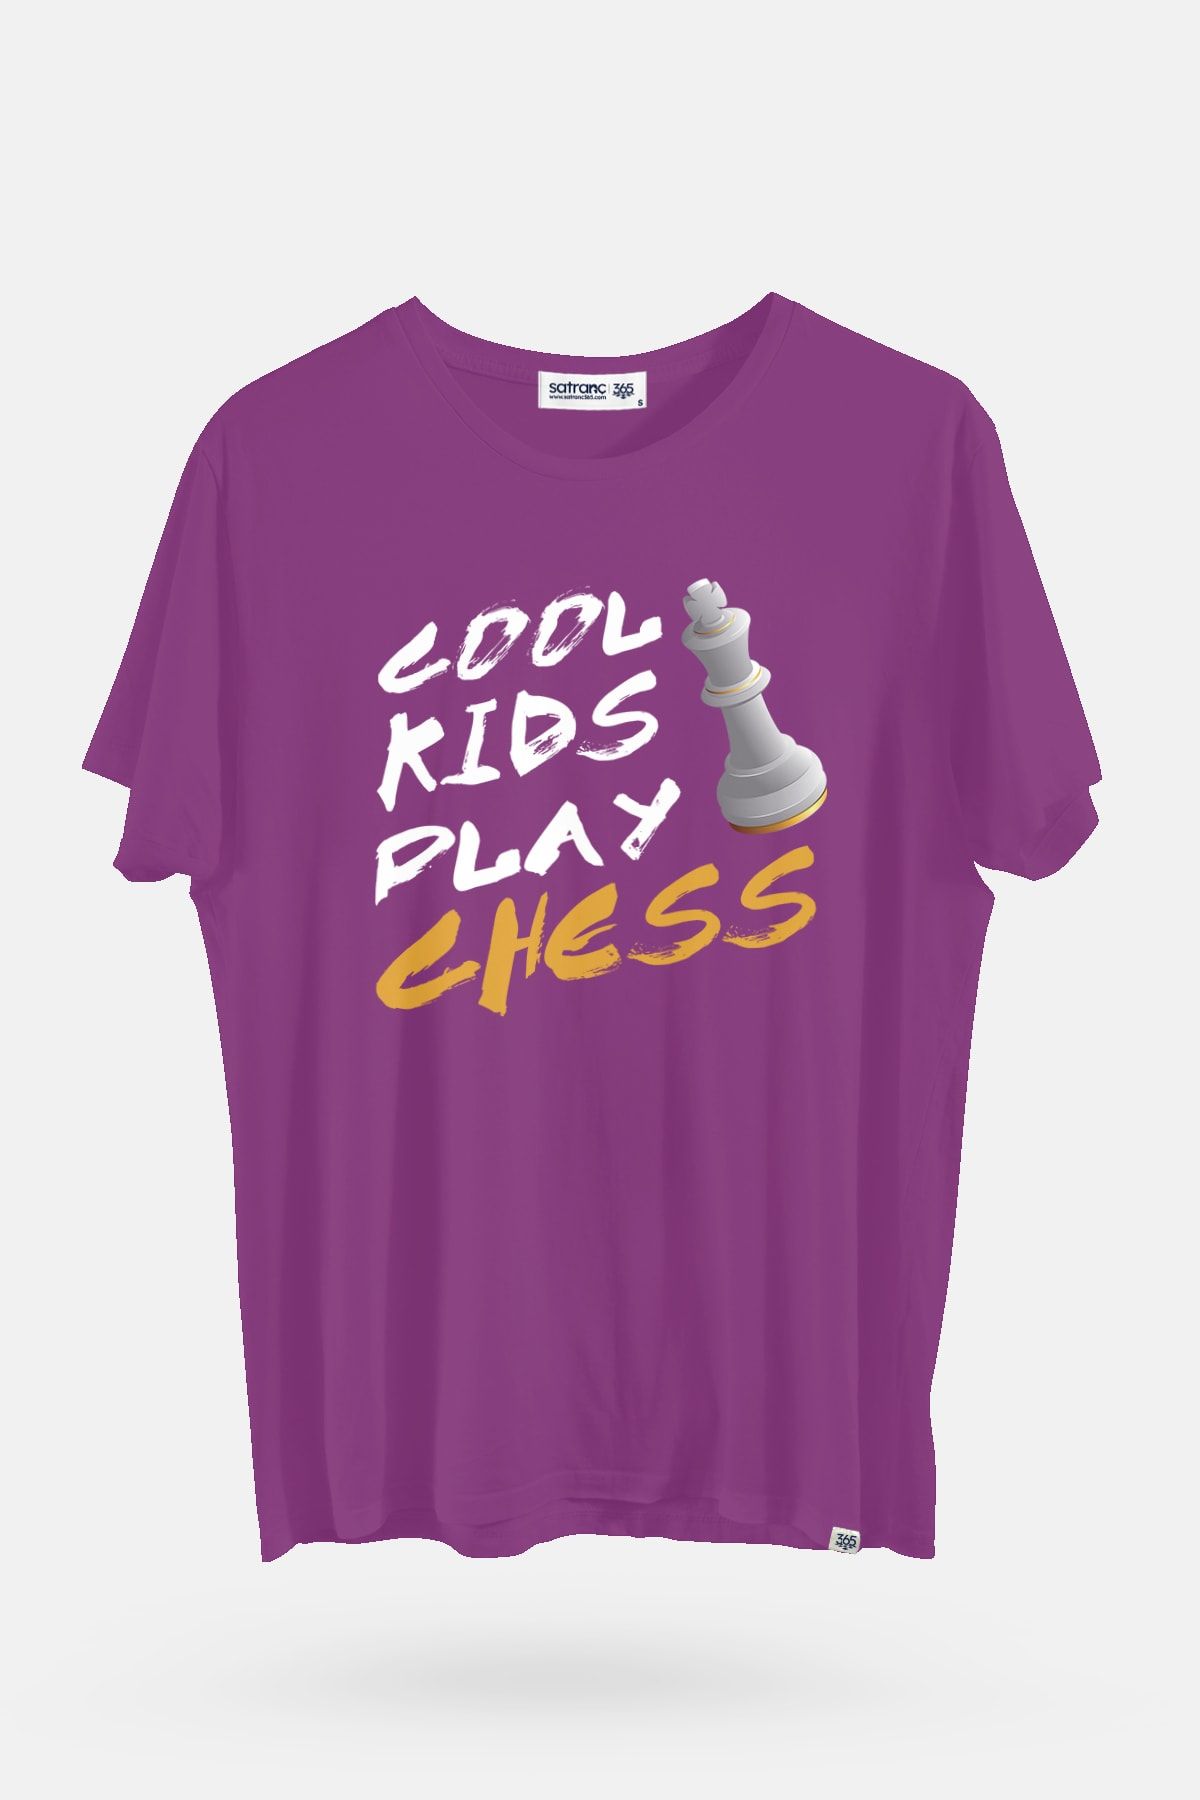 satranc365 Cool Kids Play Chess Satranç T-shirt